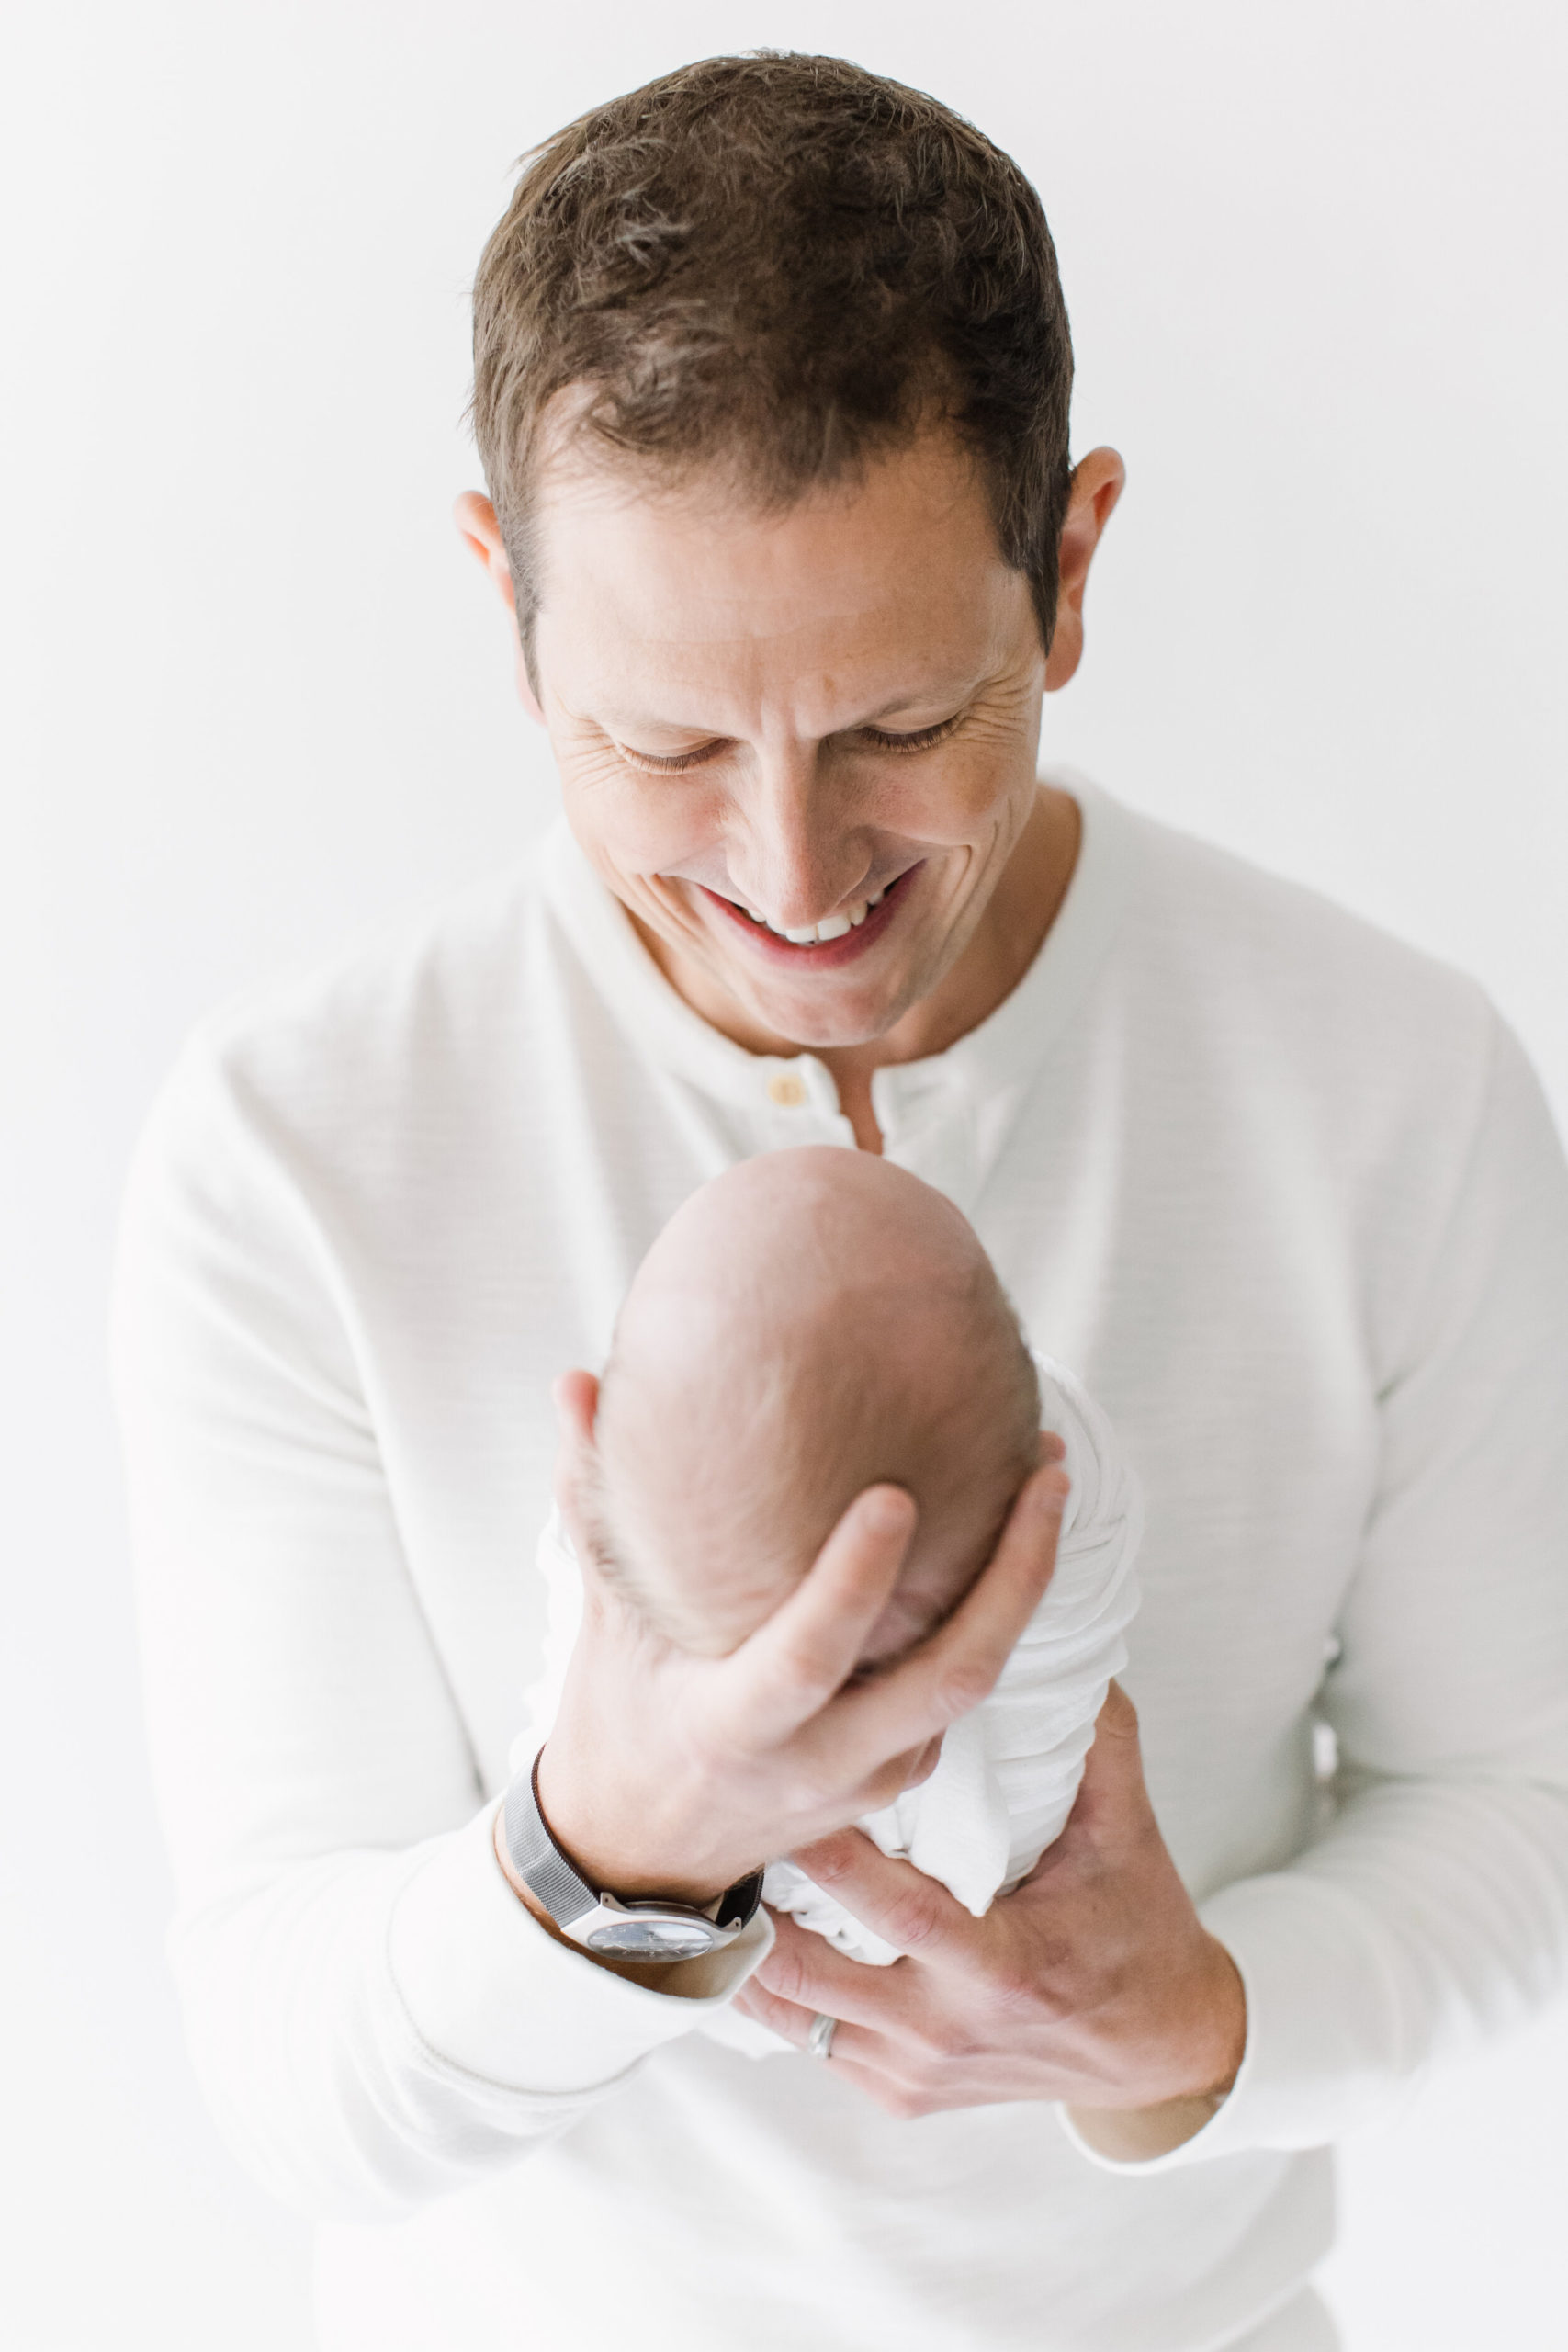 joyful dad and newborn portrait